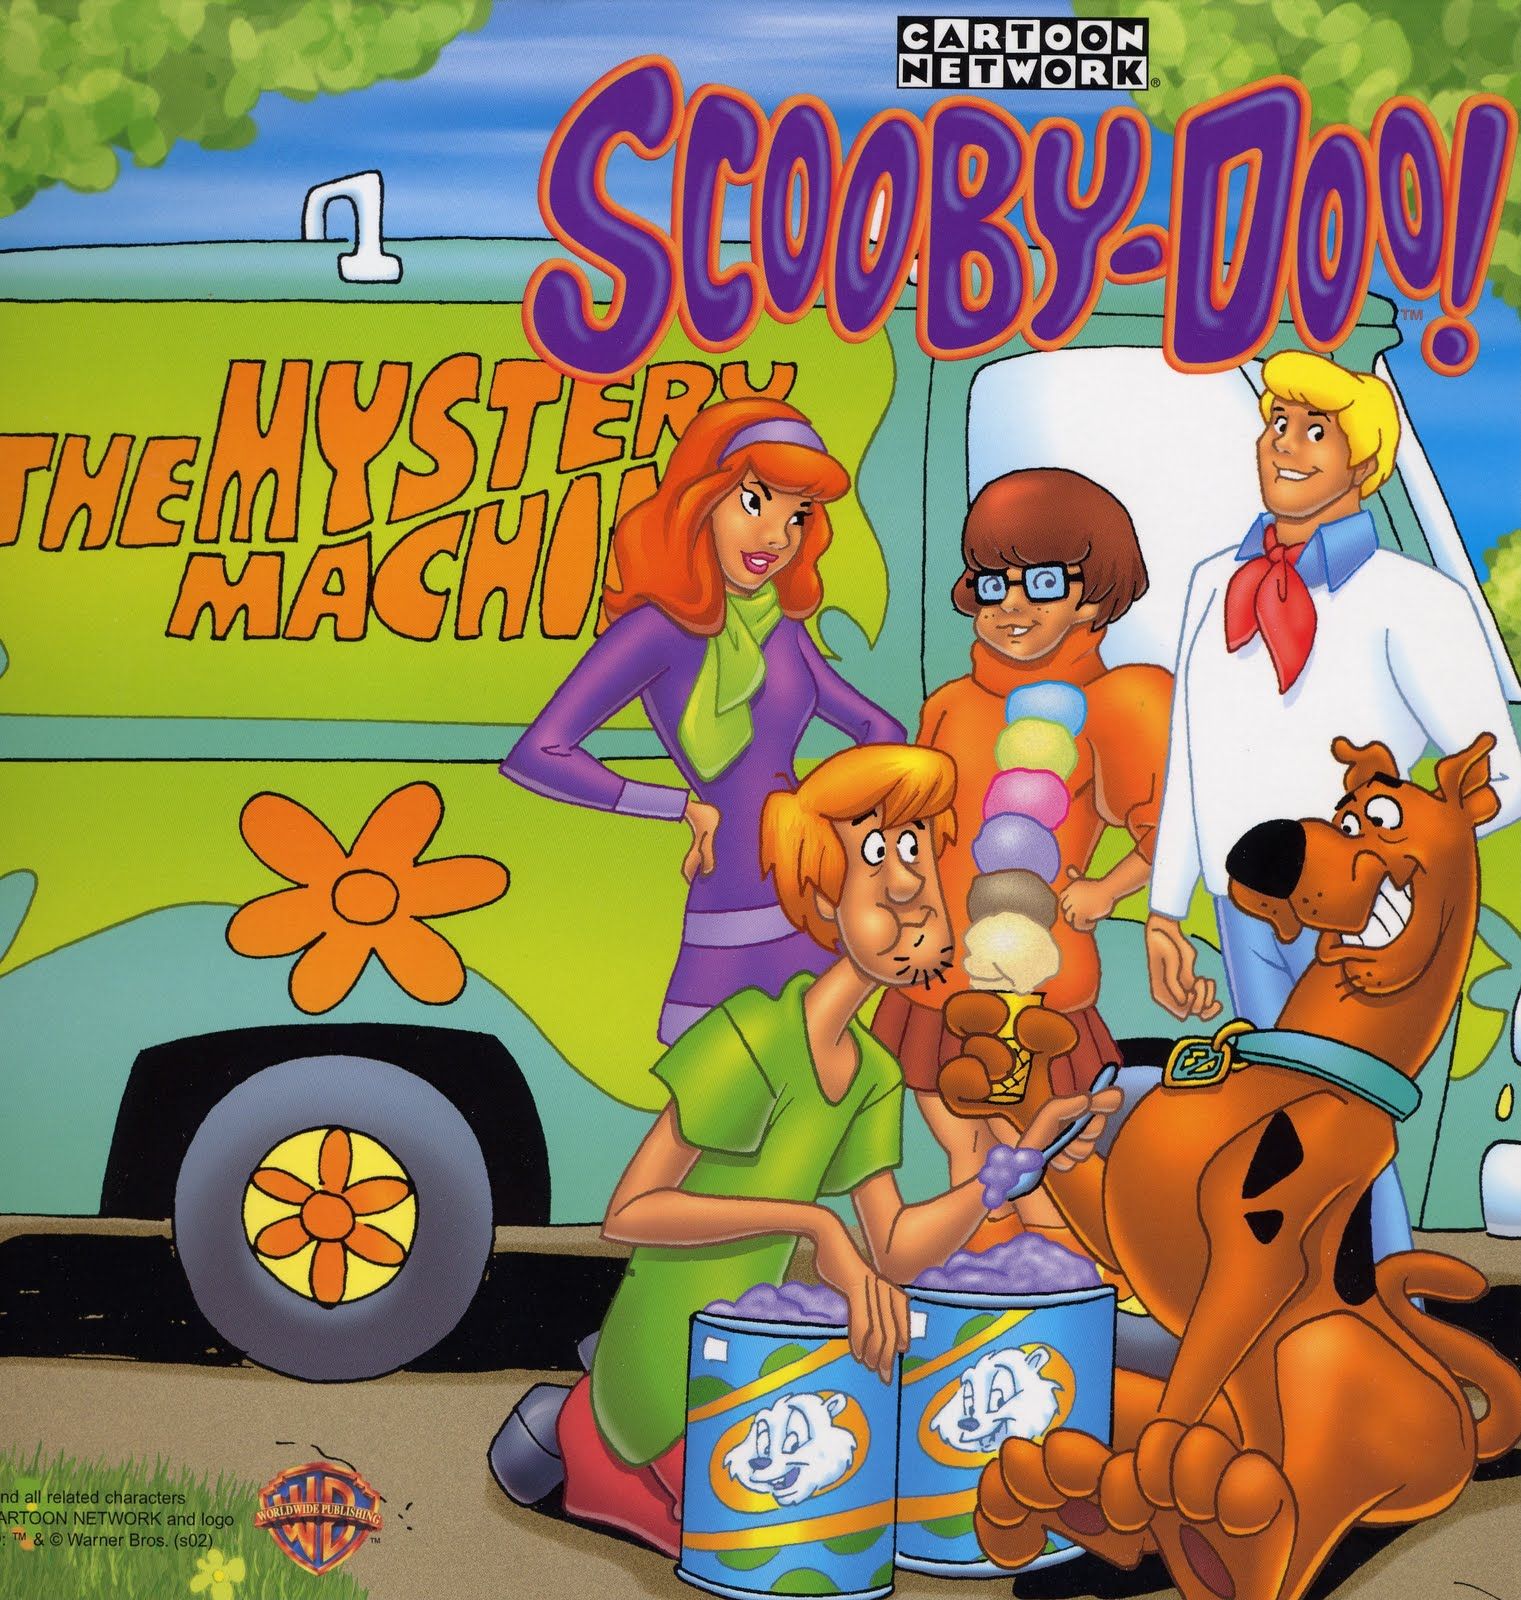 Scooby Dooby Doo Images Wallpapers